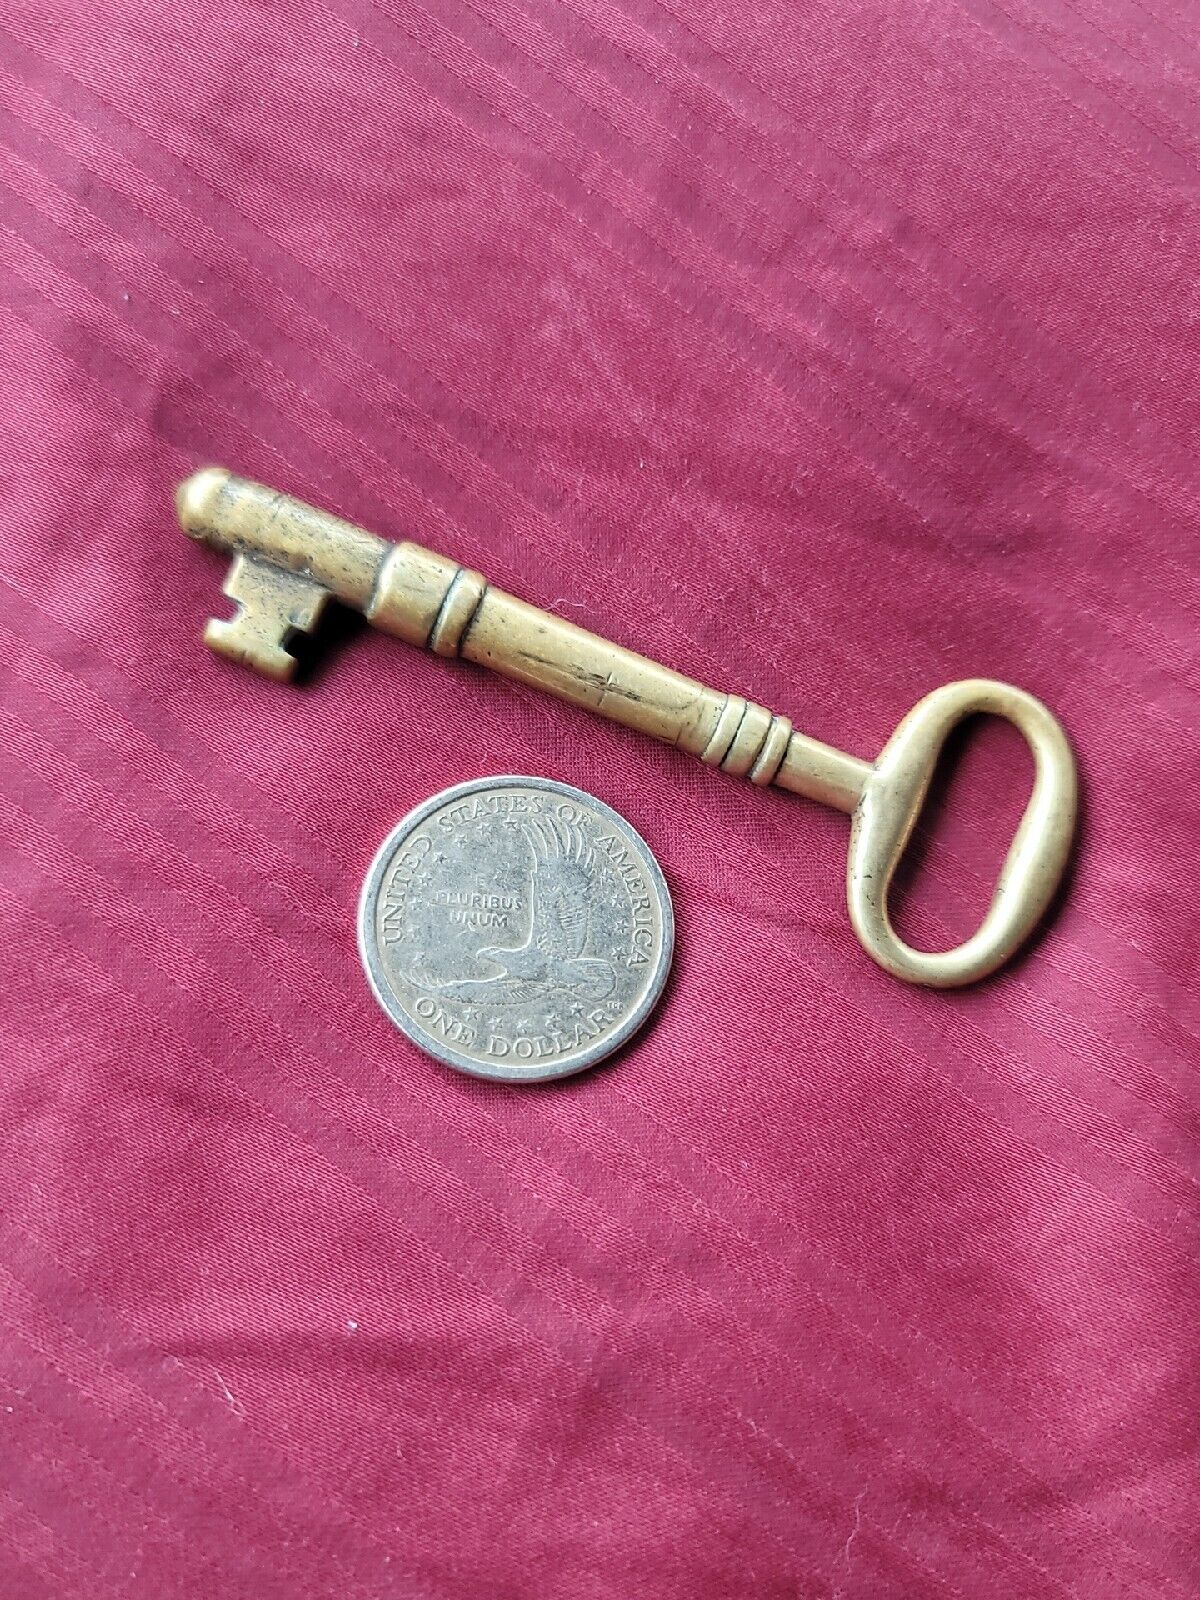 Outstanding Old Brass Key☆ Neat Heavy Thick Metal Skeleton Key